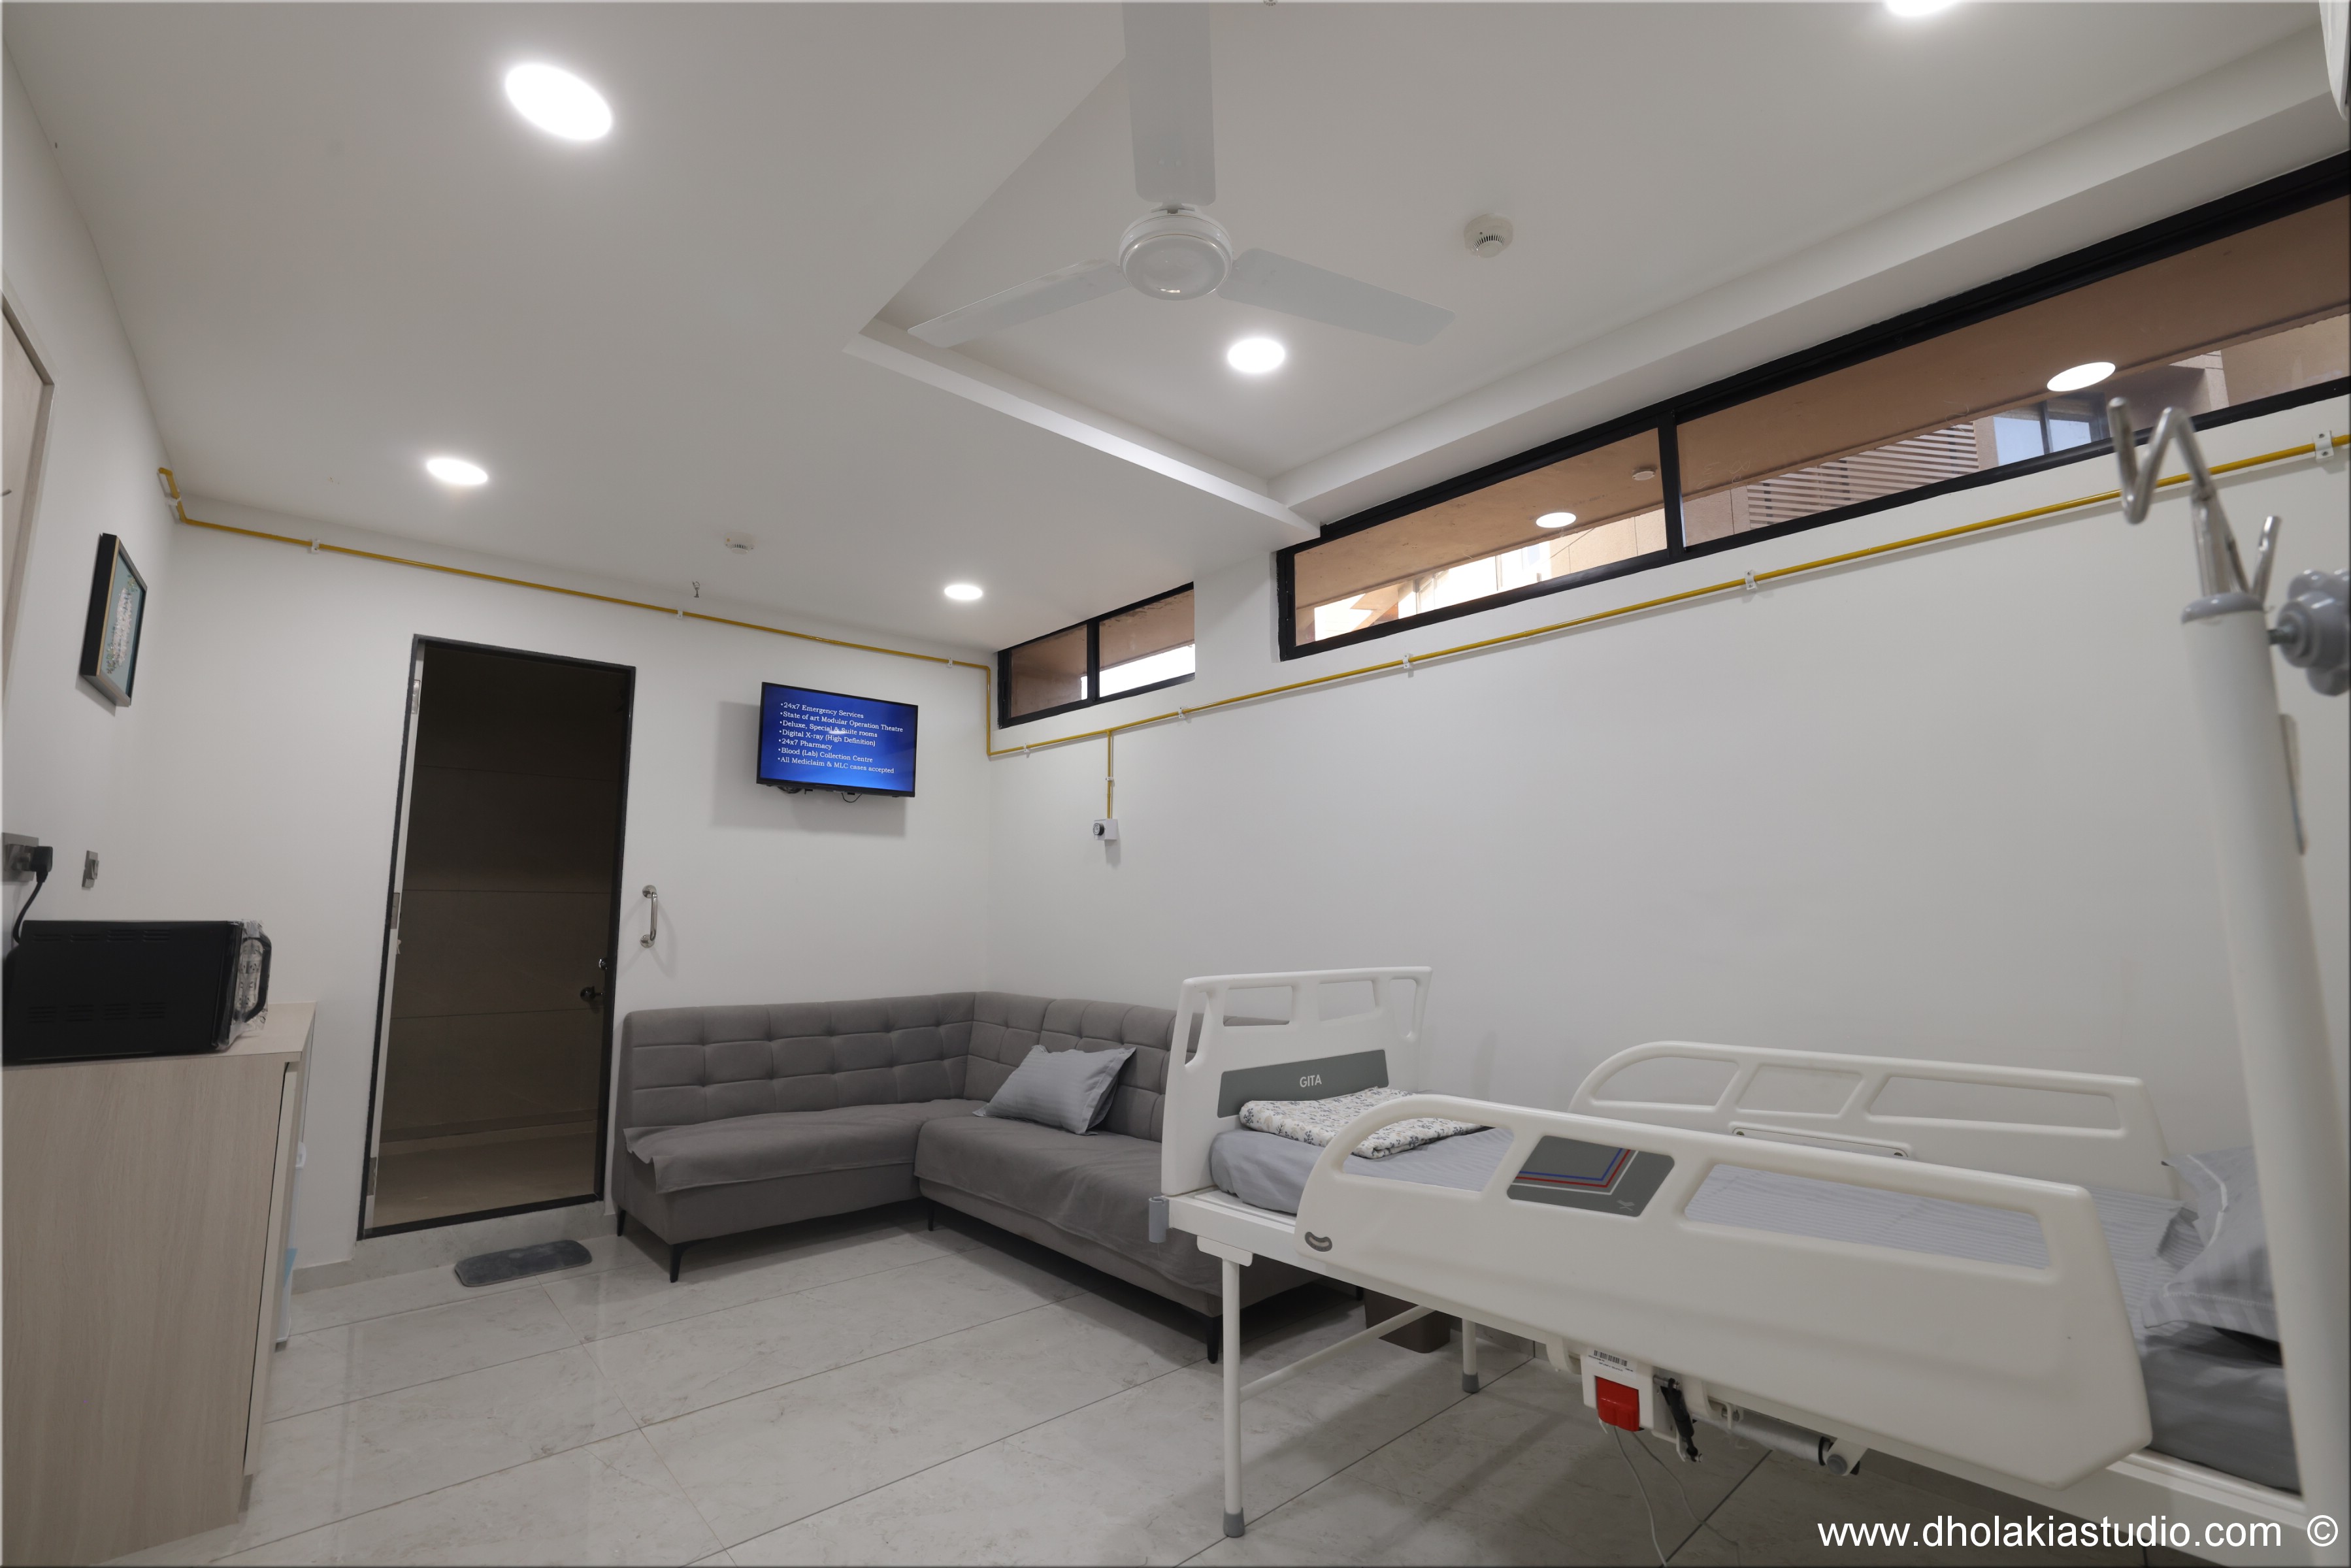 Best Orthopedic Hospital In Ahmedabad